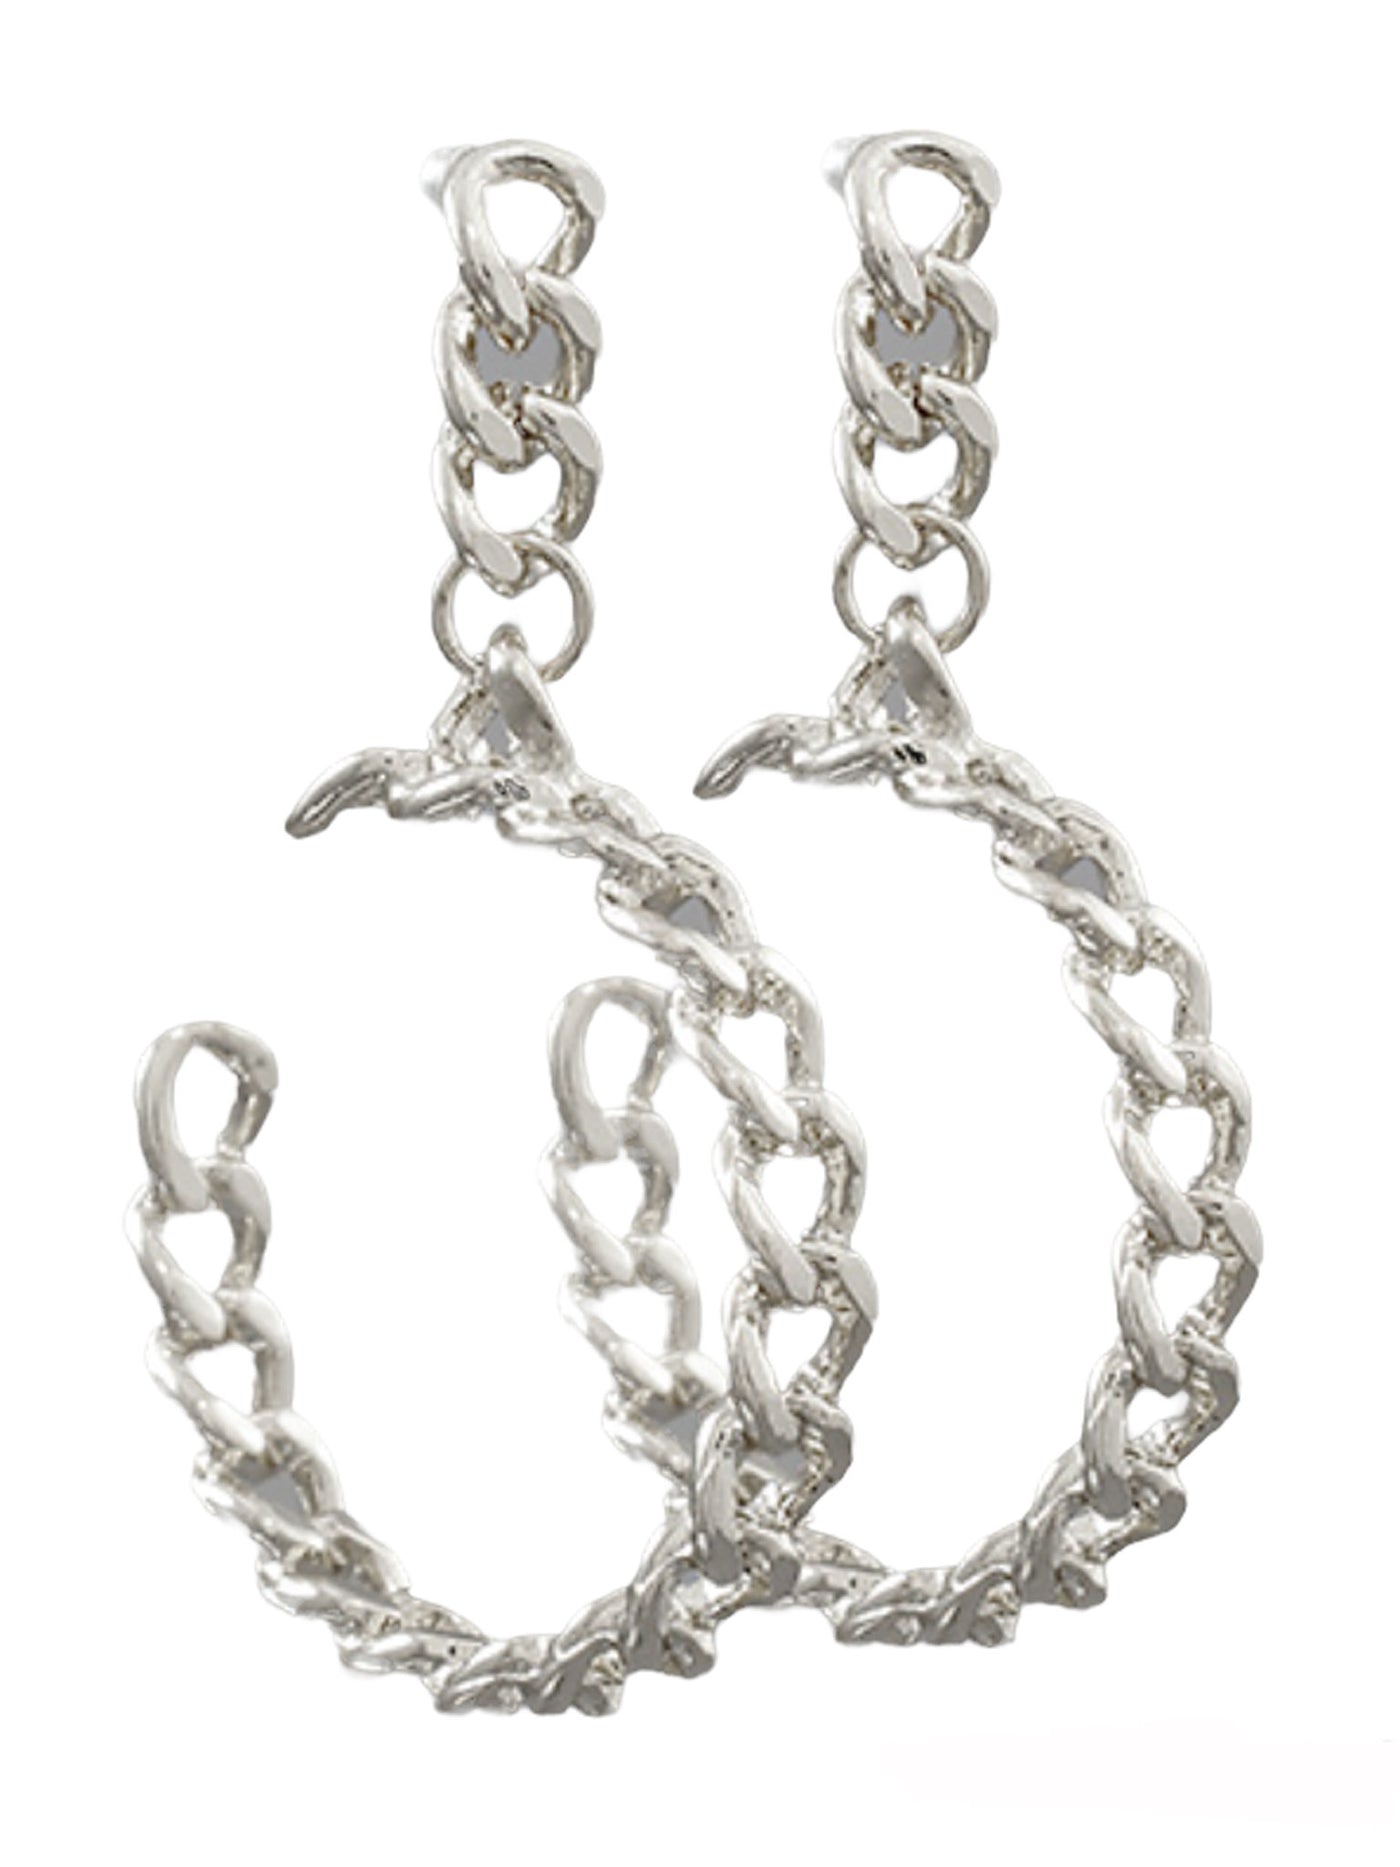 Chain Open Circle Dangle Earrings